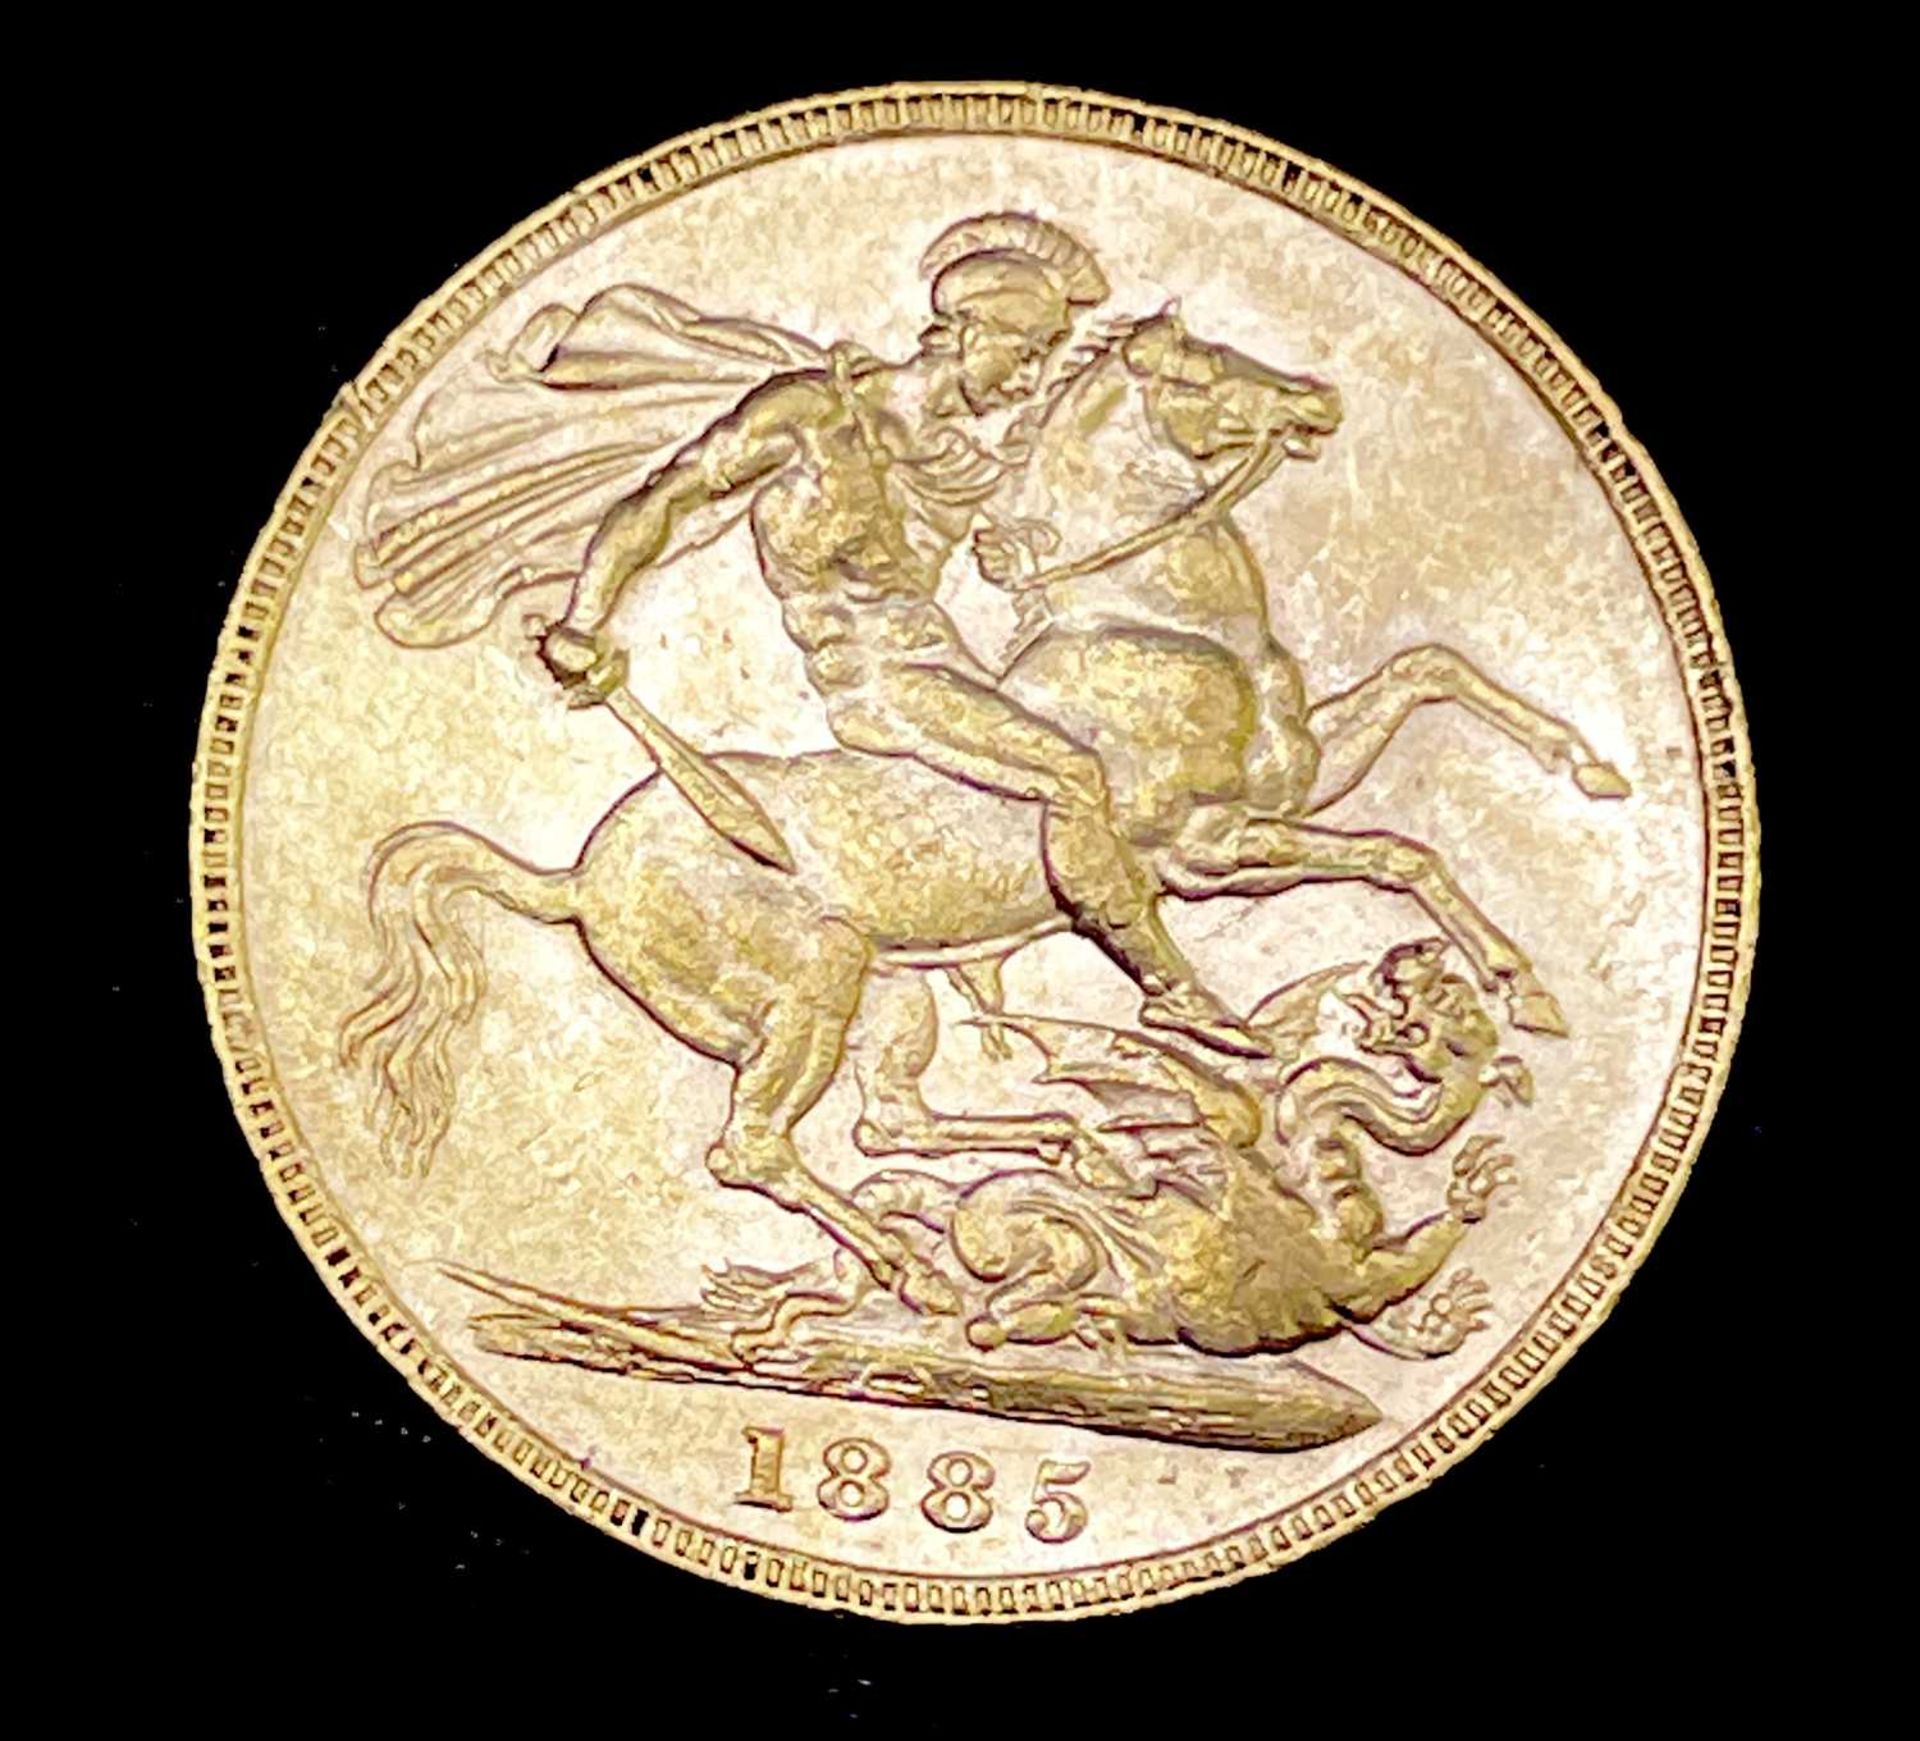 Great Britain Gold Sovereign 1885 EF+ No Sydney or Melbourne mint mark apparent. George & Dragon.